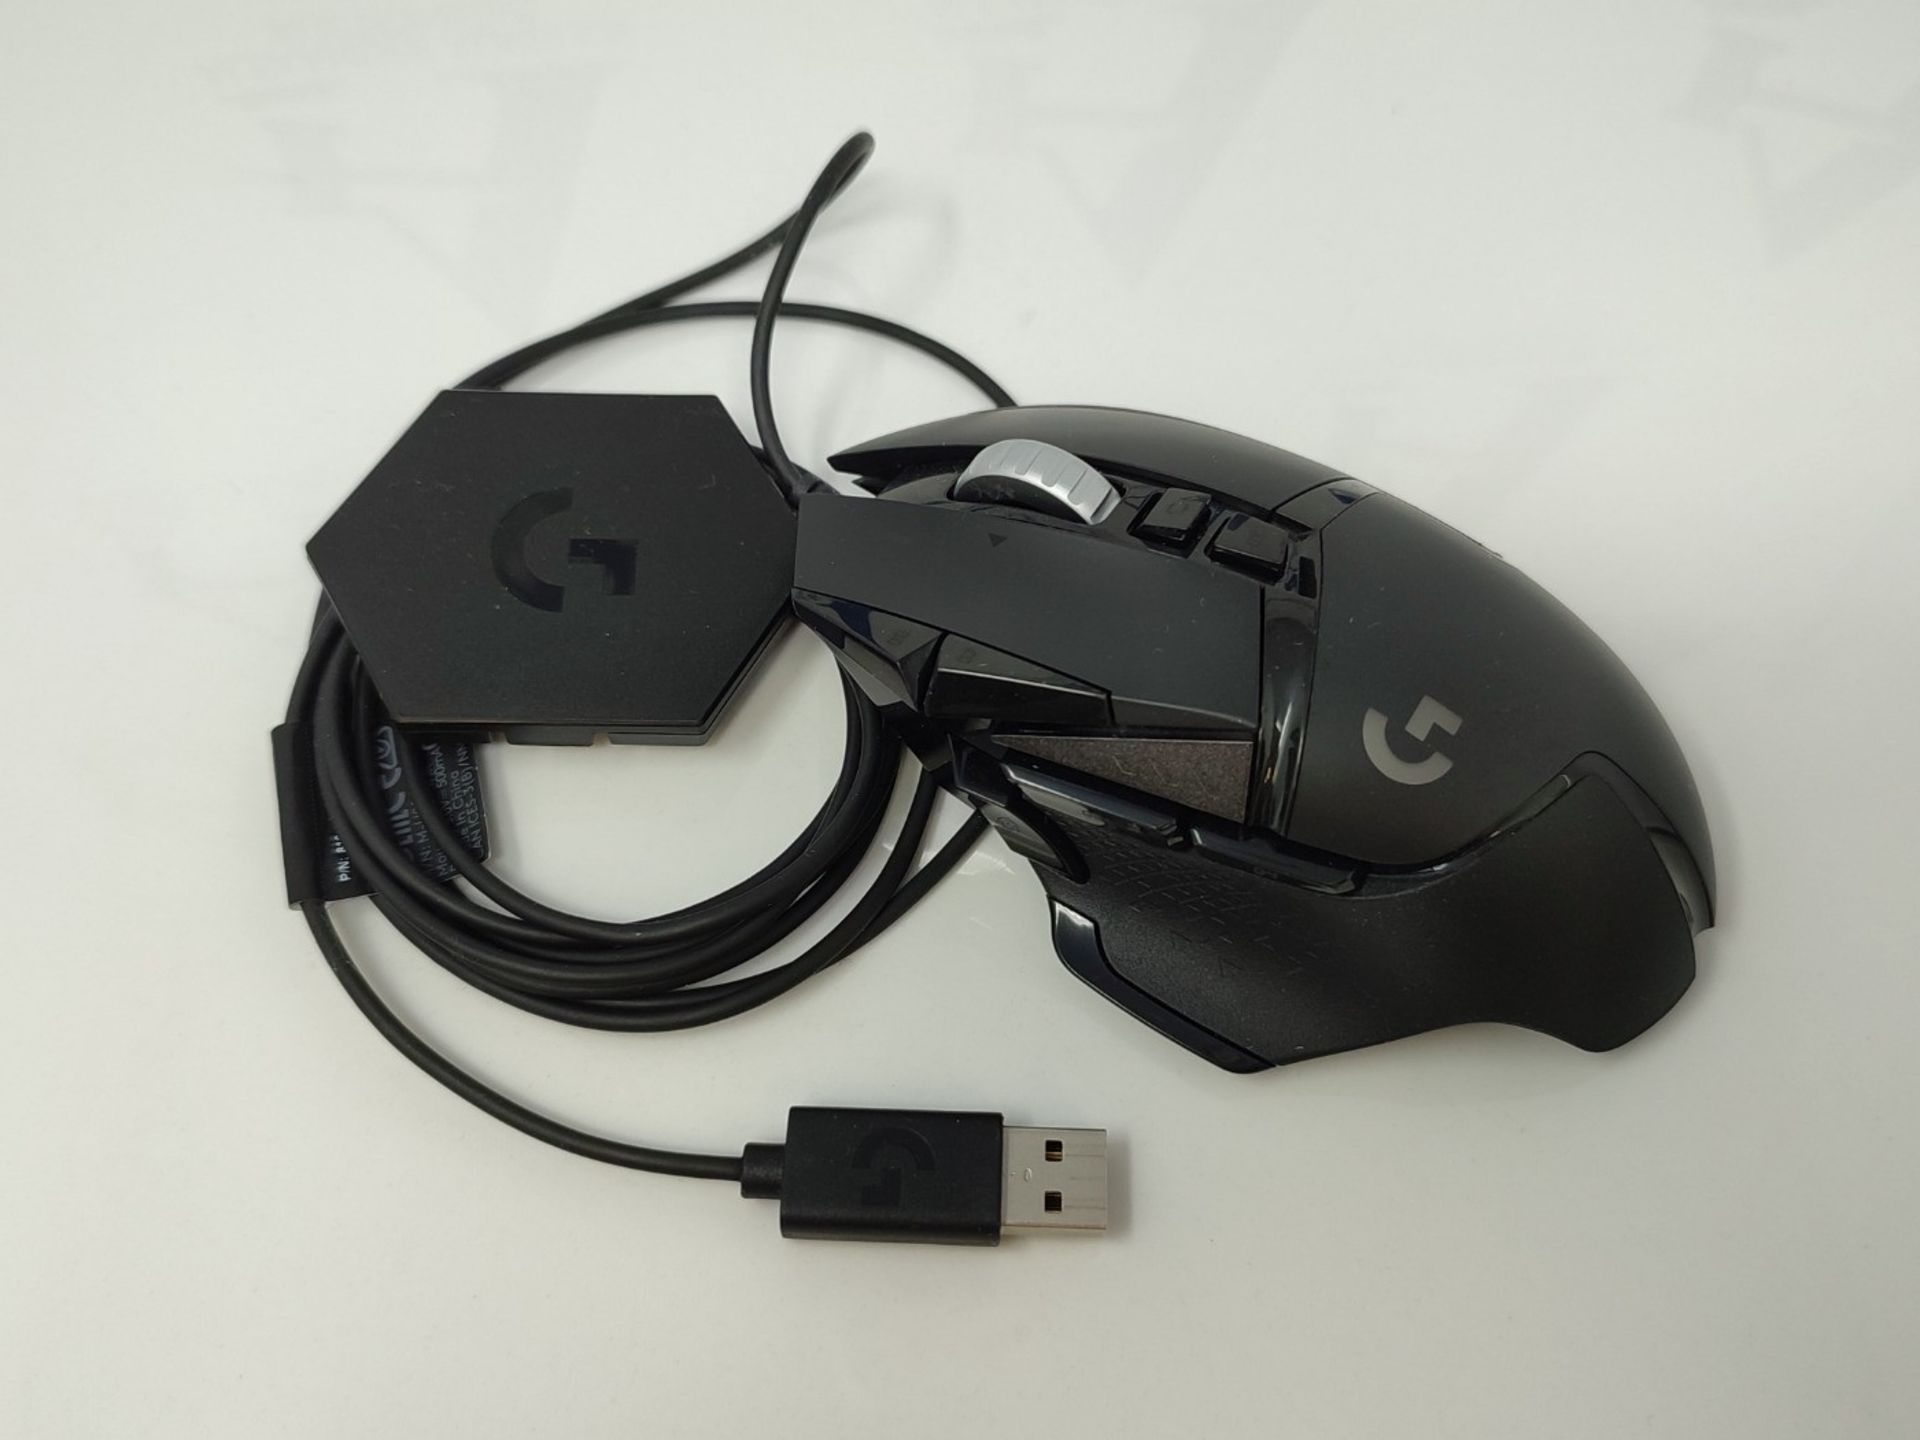 Logitech G502 HERO High-Performance Gaming Mouse with HERO 25K DPI optical sensor, RGB - Image 3 of 6